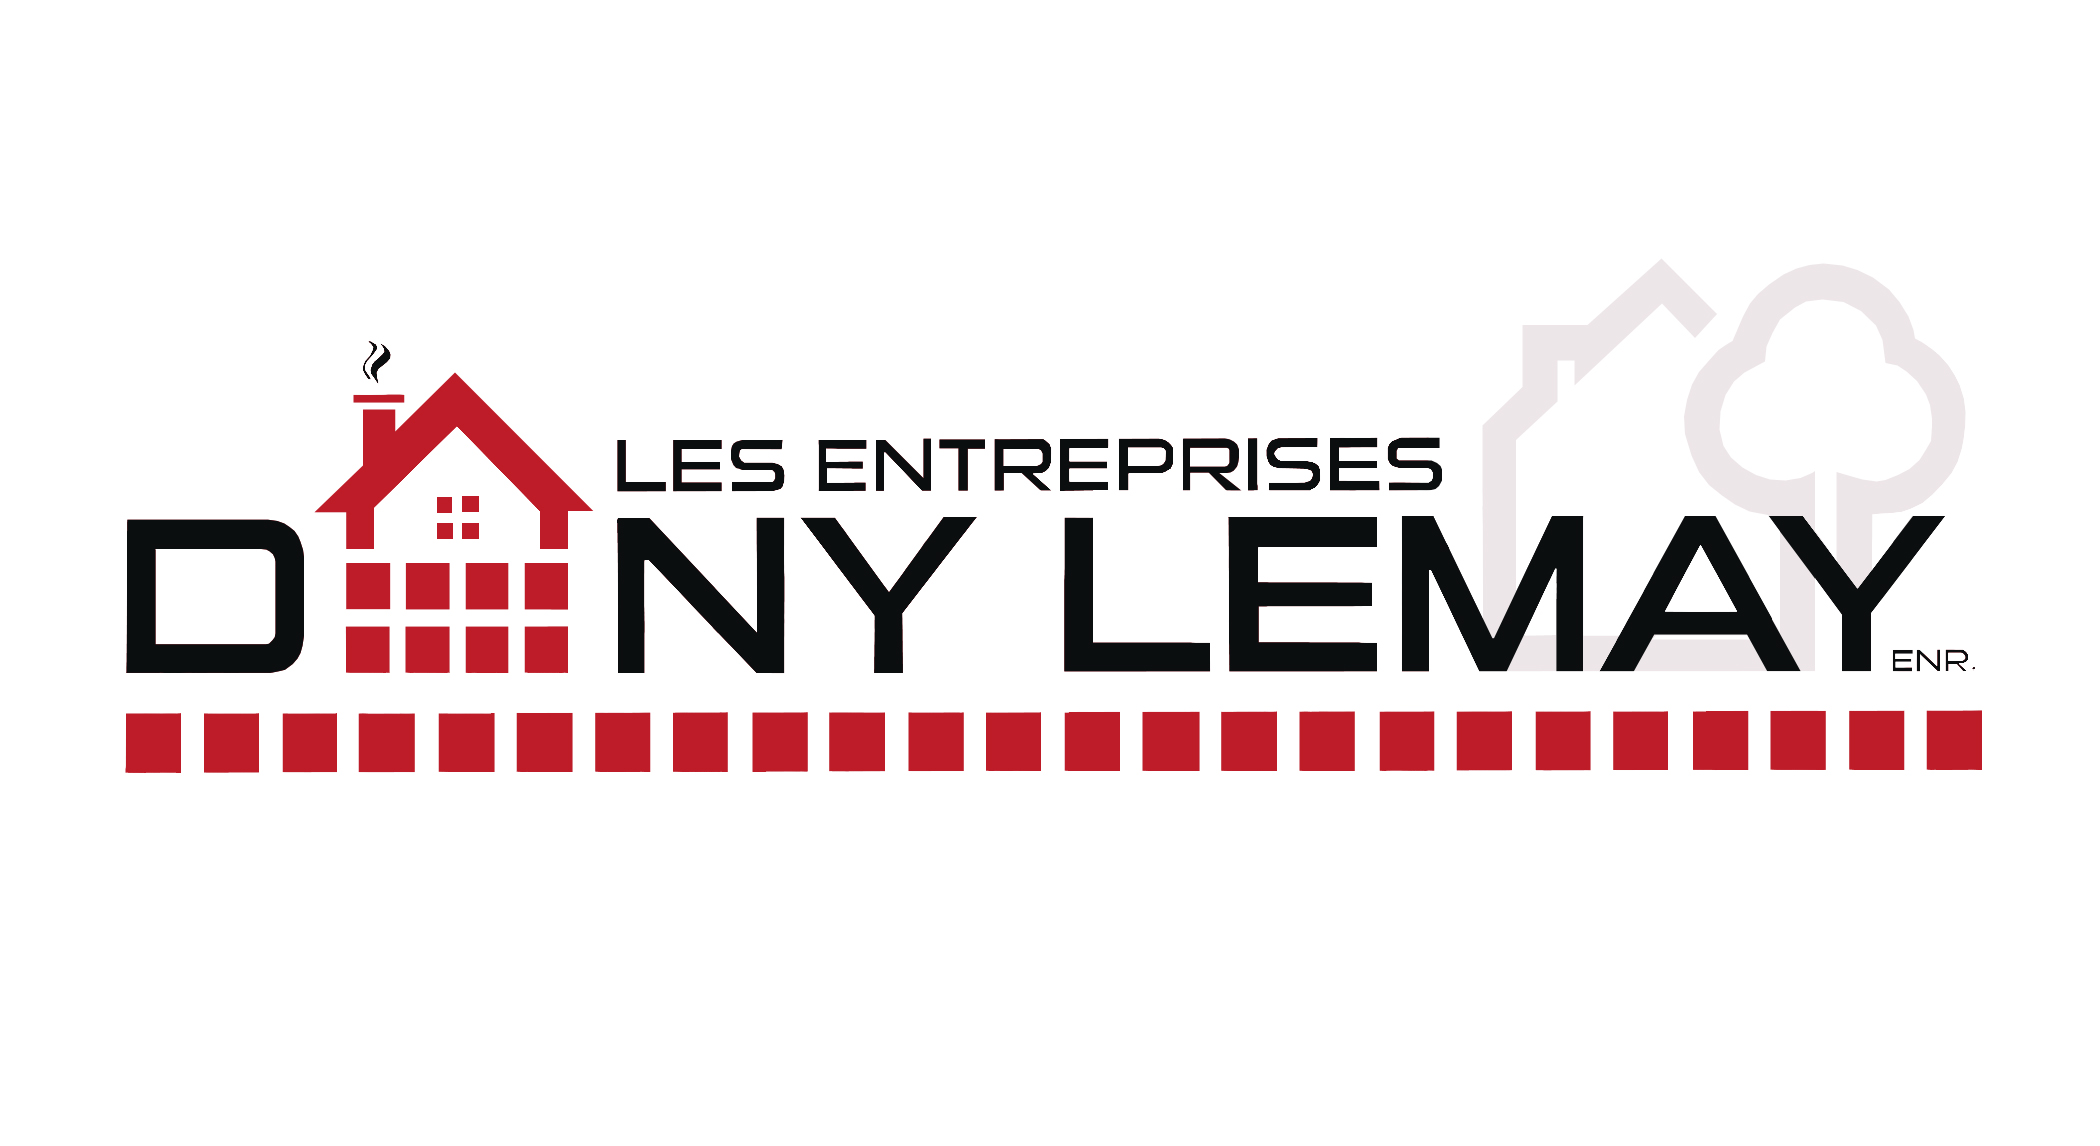 Les Entreprises Dany Lemay Inc